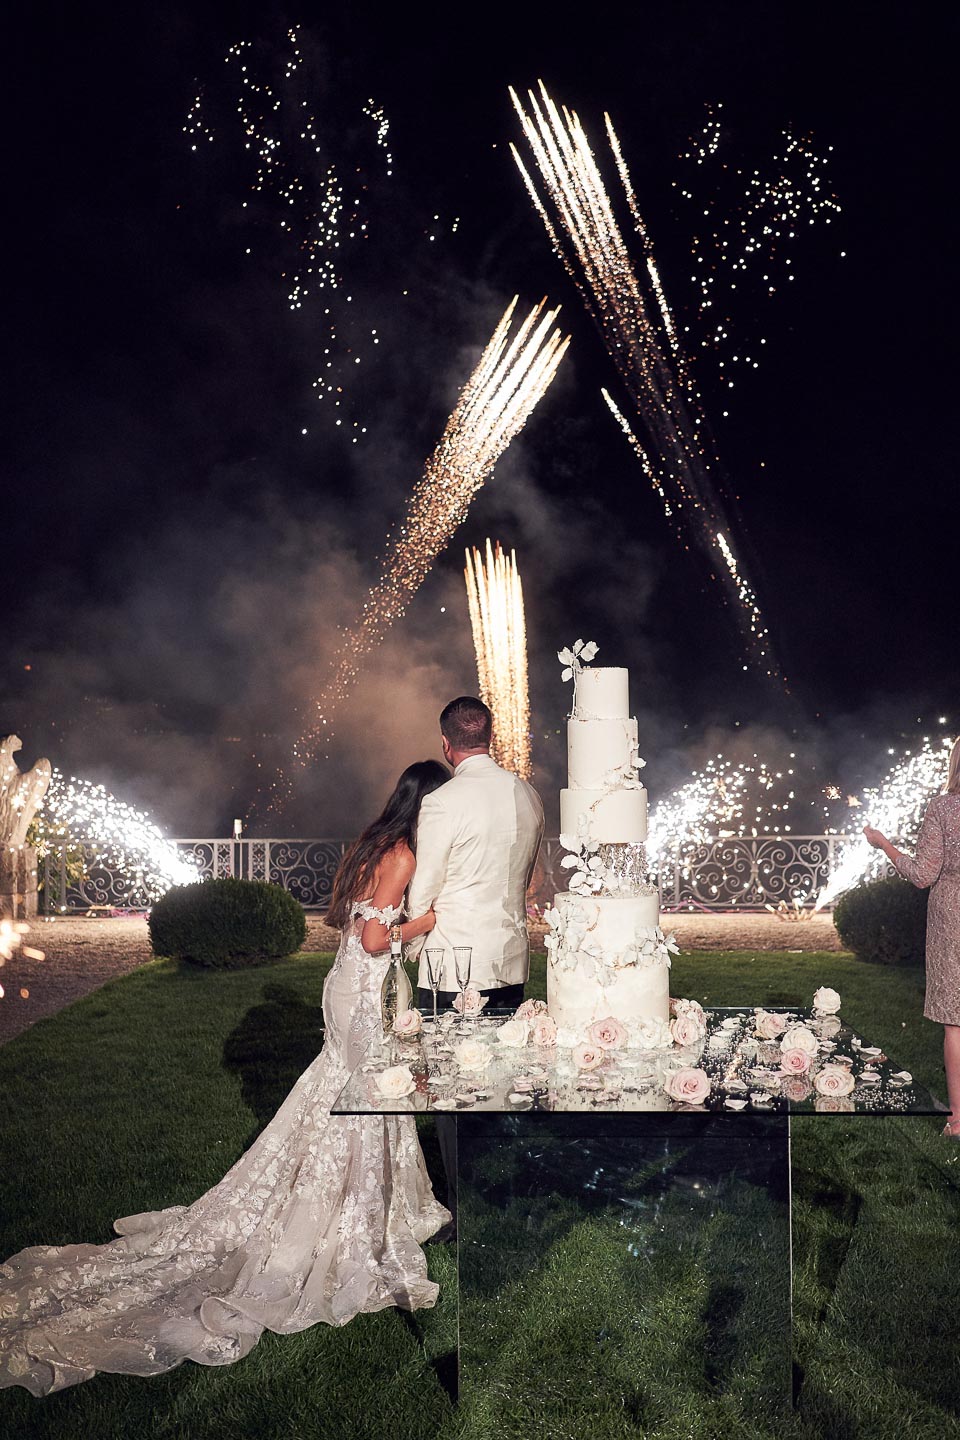 villa balbiano best wedding venue lake como italy wedding cake fireworks show